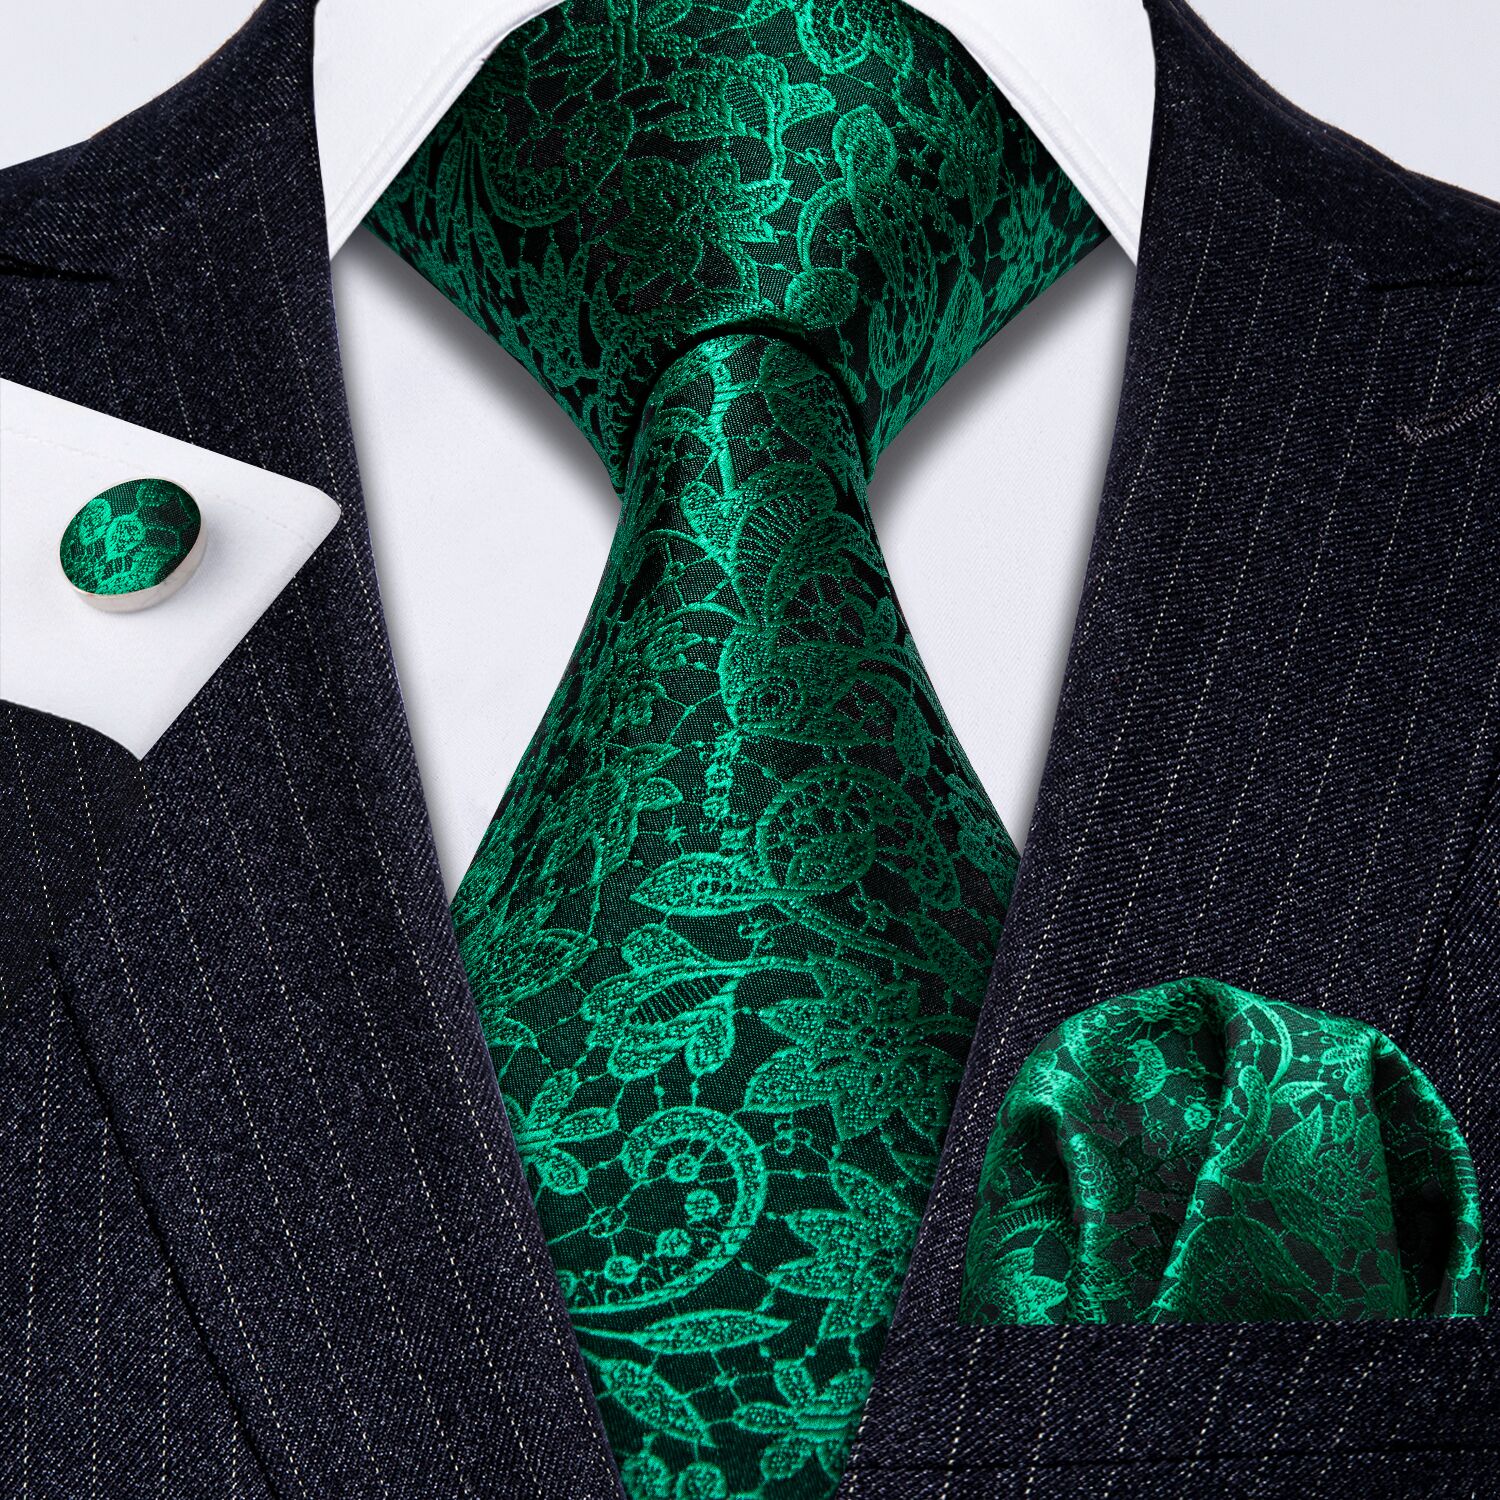 Barry Wang Floral Tie Fluorescent Green Paisley Silk Tie Hanky Cufflinks Set